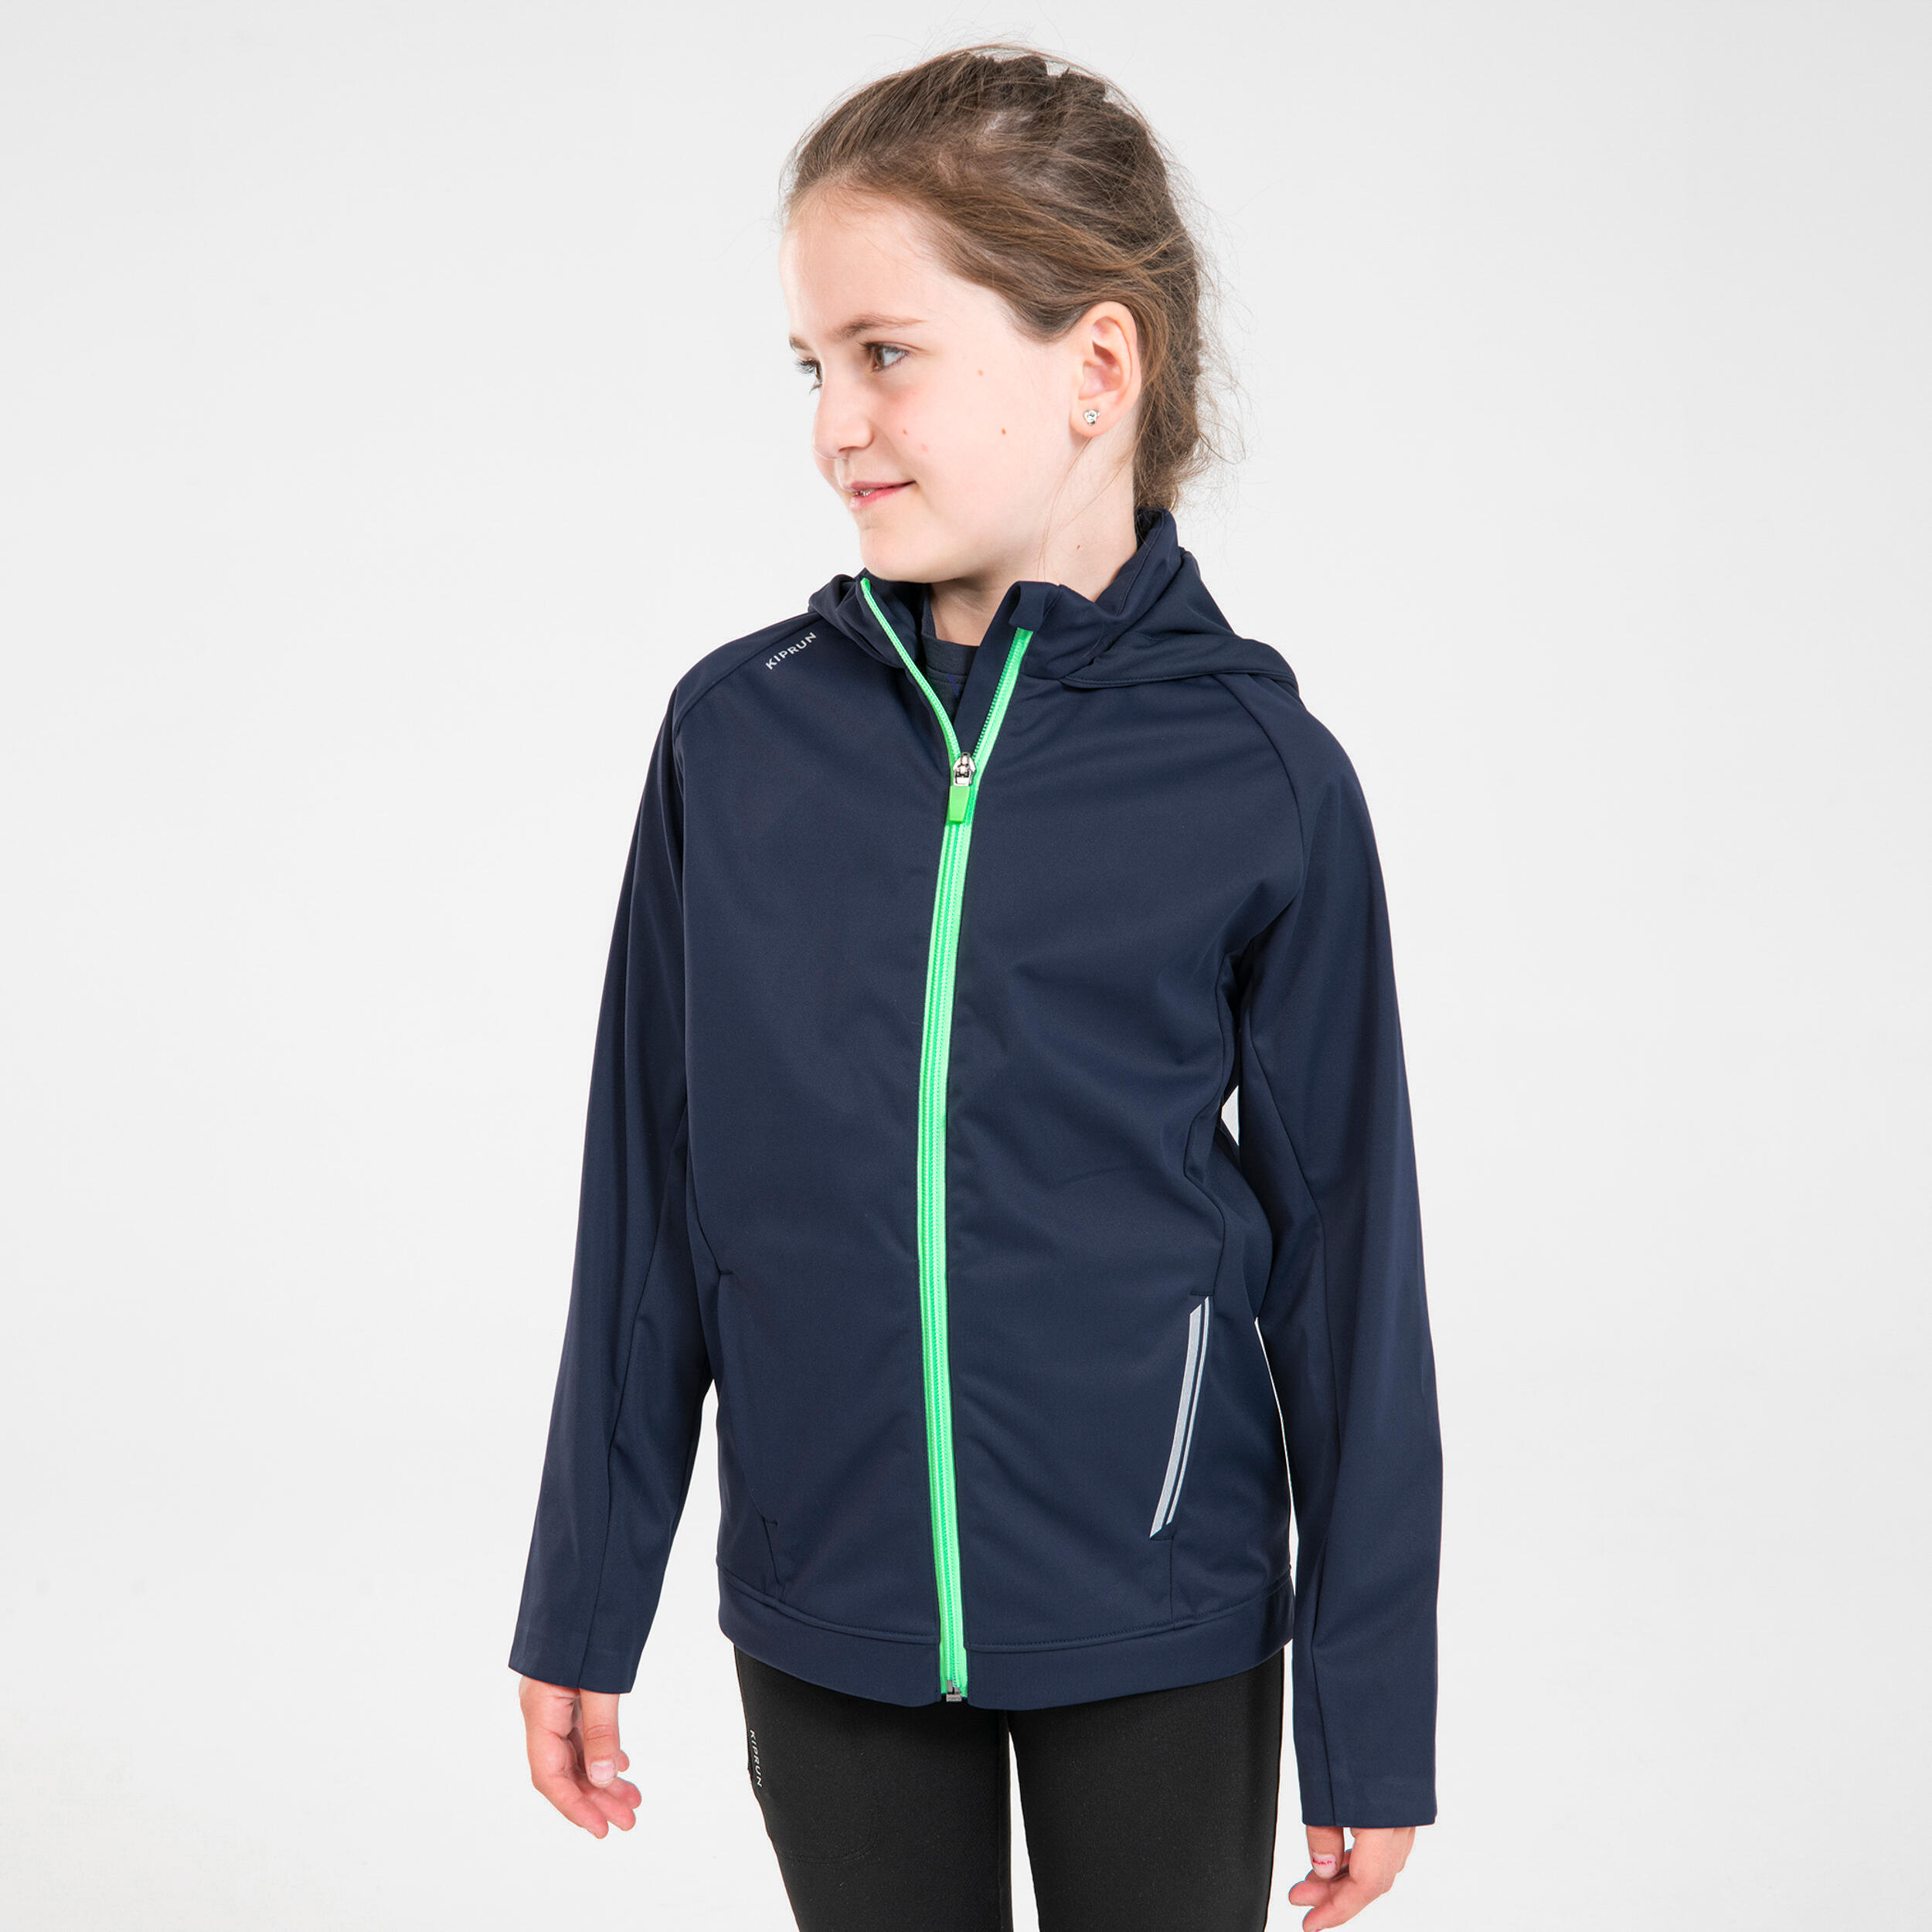 Jachetă Călduroasă Alergare AT500 Bleumarin-Verde Copii KIPRUN decathlon.ro